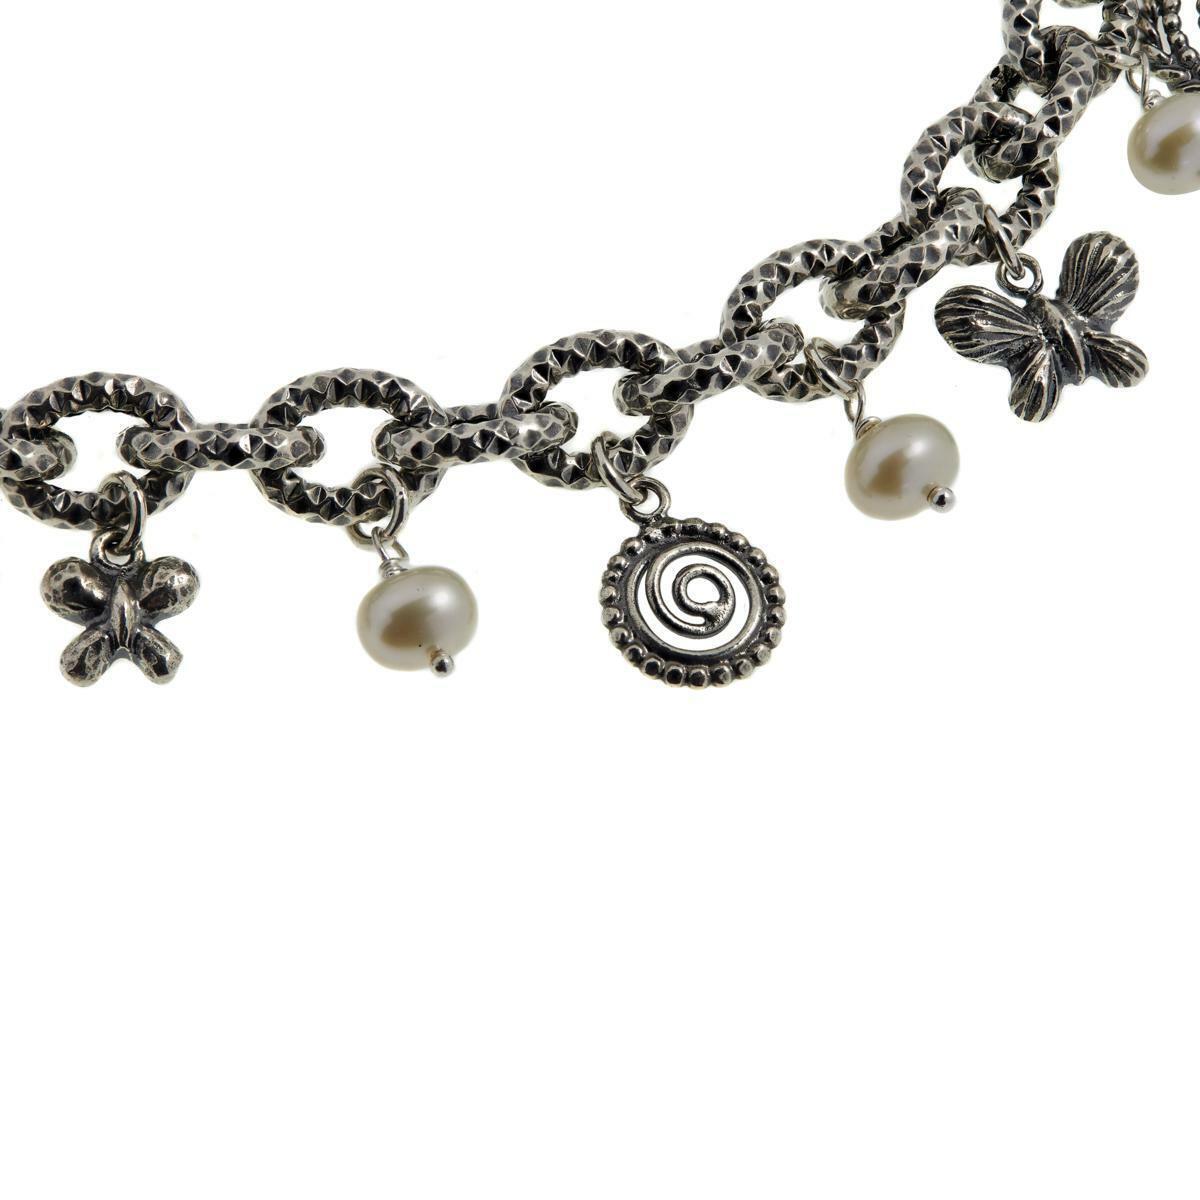 LiPaz Sterling Silver Cultured Pearl Butterfly Charm Bracelet, 7-1/4"